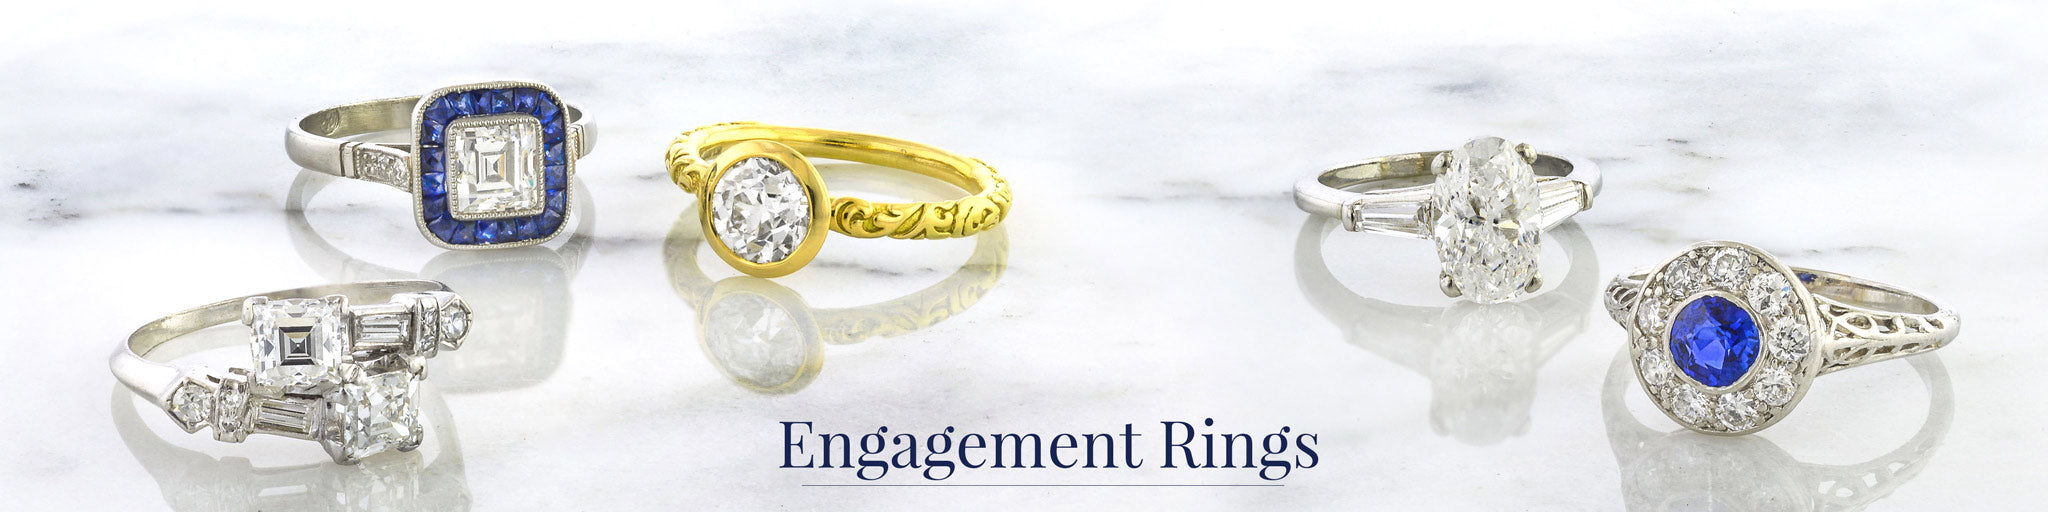 Estate Collection Diamond Bridal Wedding Ring Set, Size 6, 10K Yellow Gold  | eBay